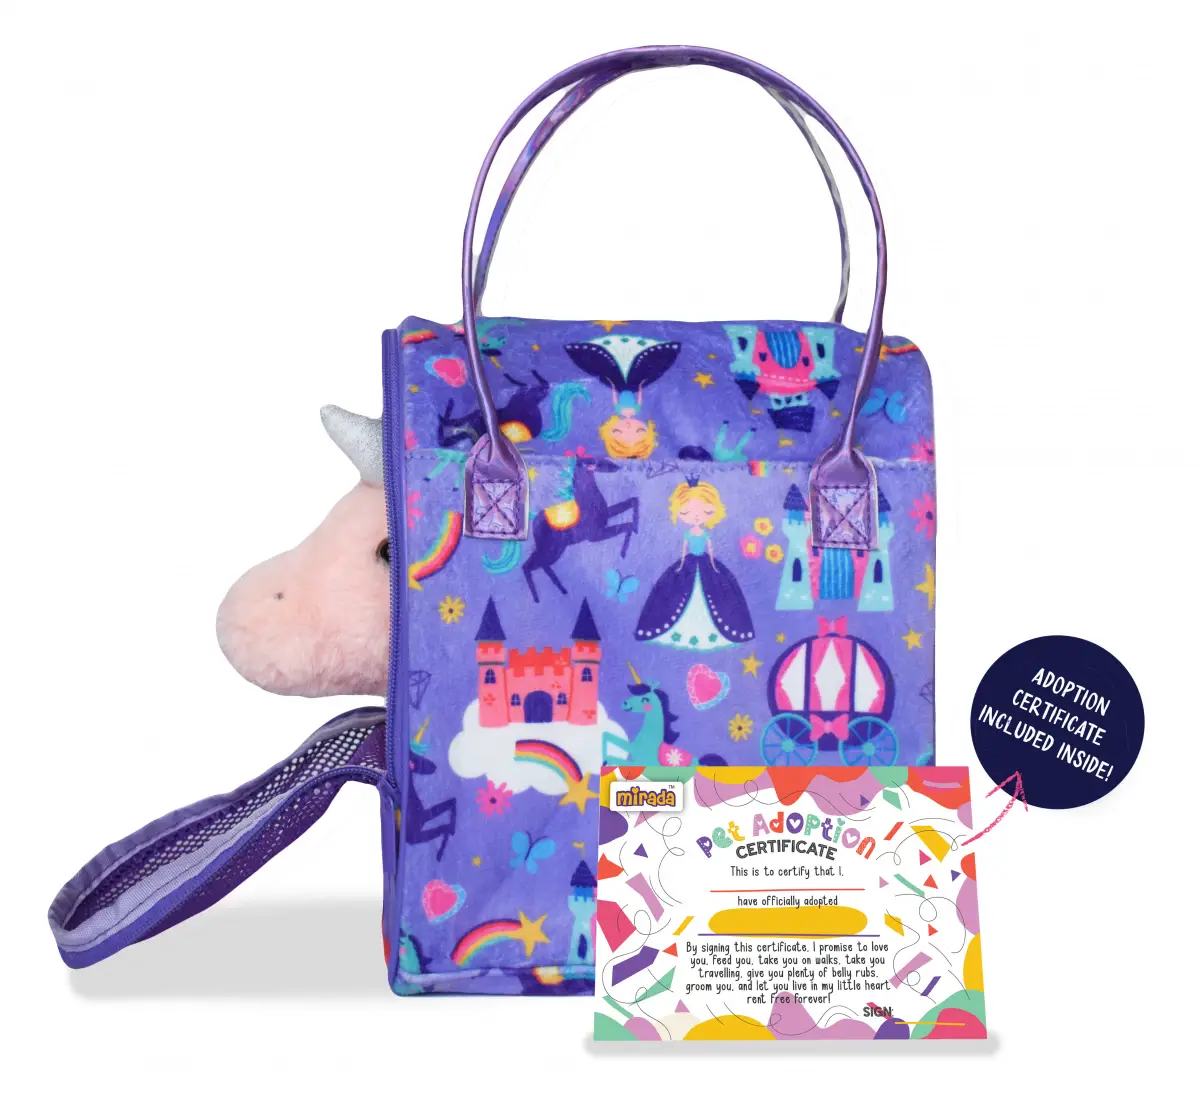 Mirada Plush Pet In A Bag Peach Unicorn, Soft Toys For Kids, 3Y+